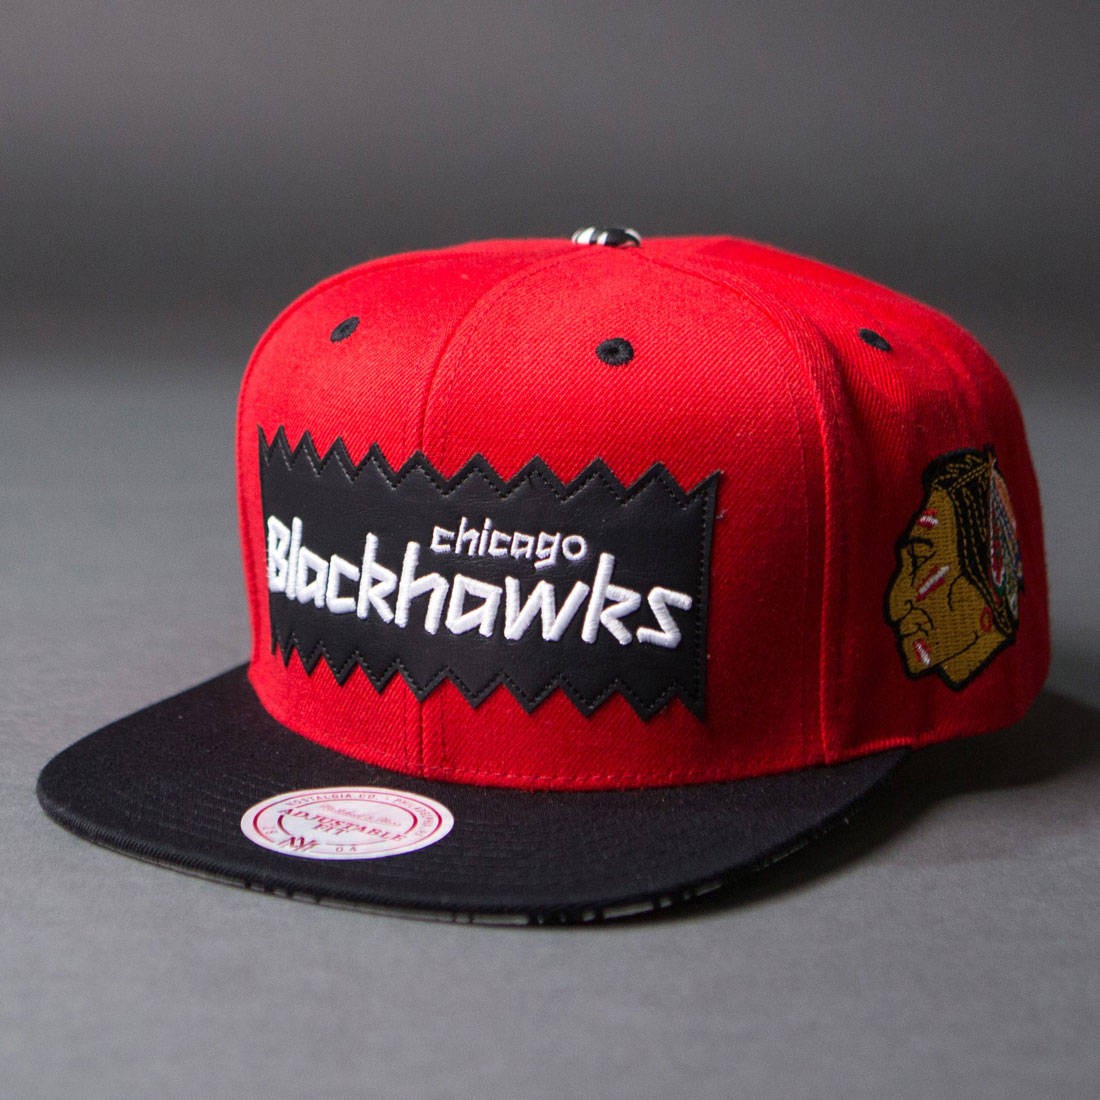 nhl blackhawks cap